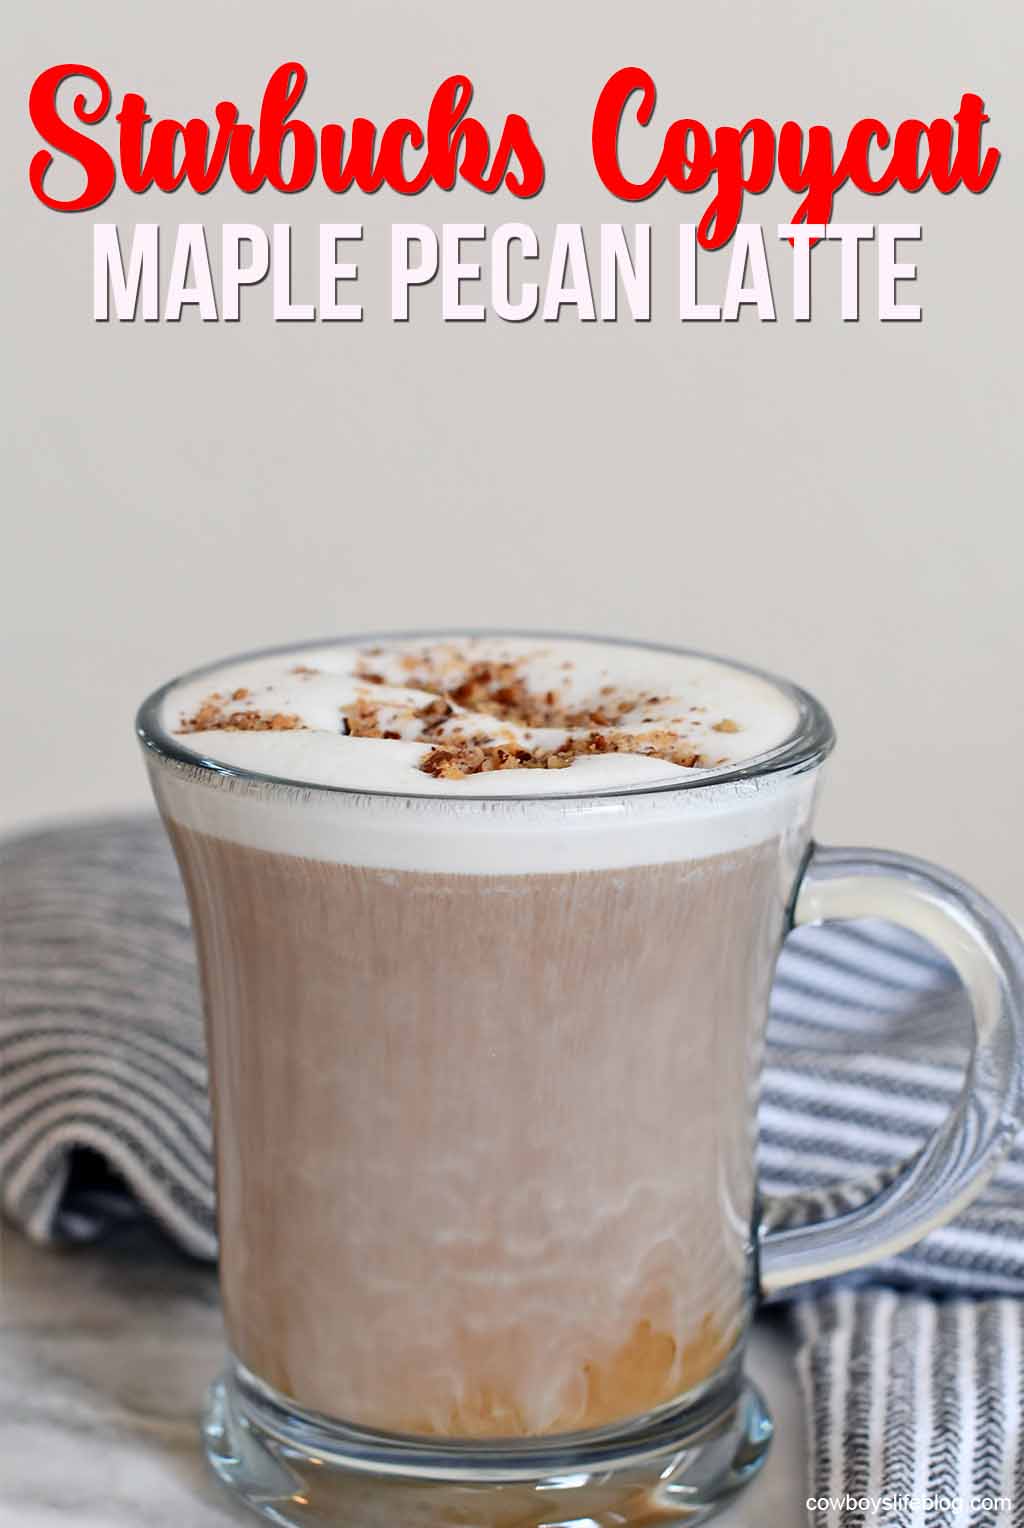 How to make Maple Pecan Latte